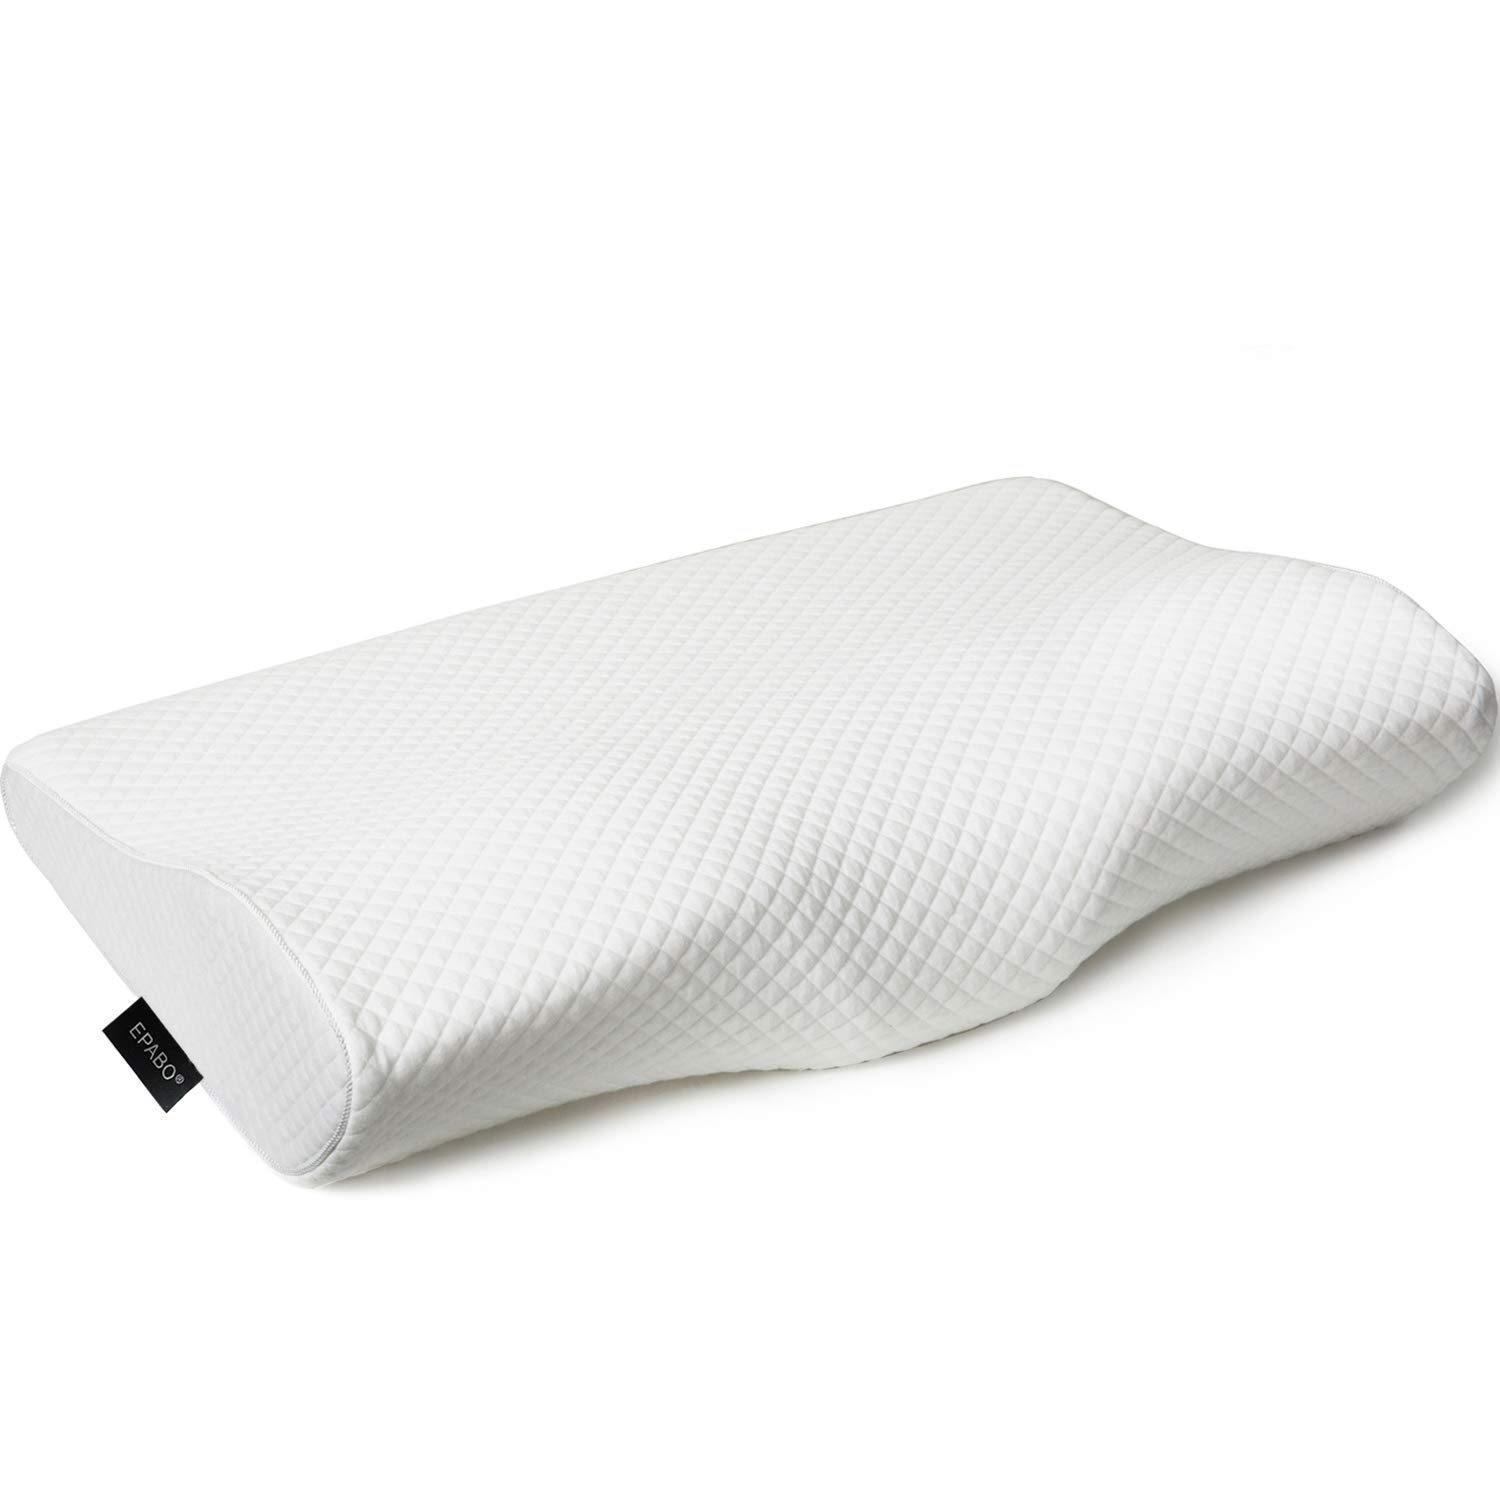 EPABO Contour Memory Foam Cervical Pillow